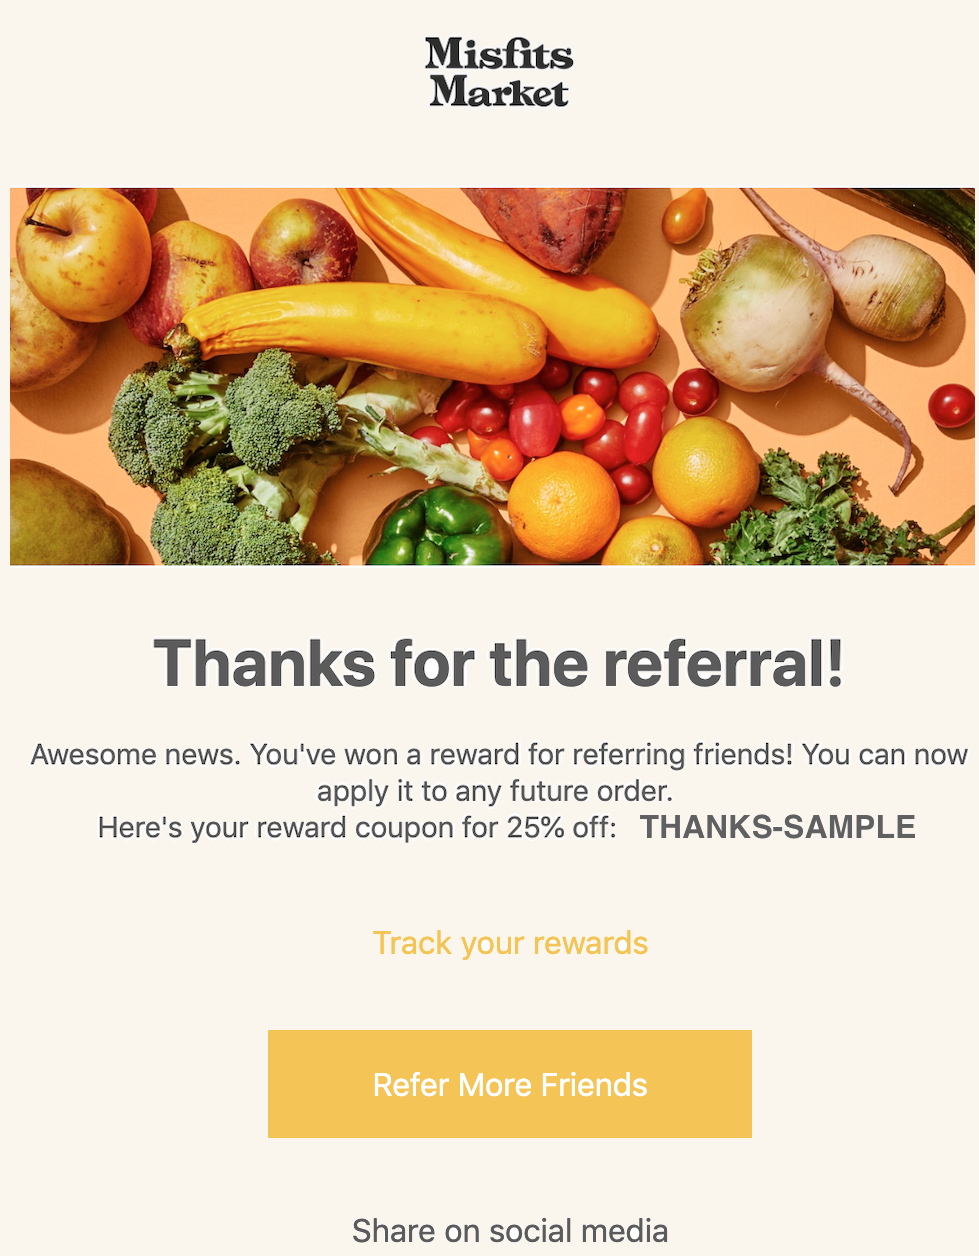 Misfits Market referral email